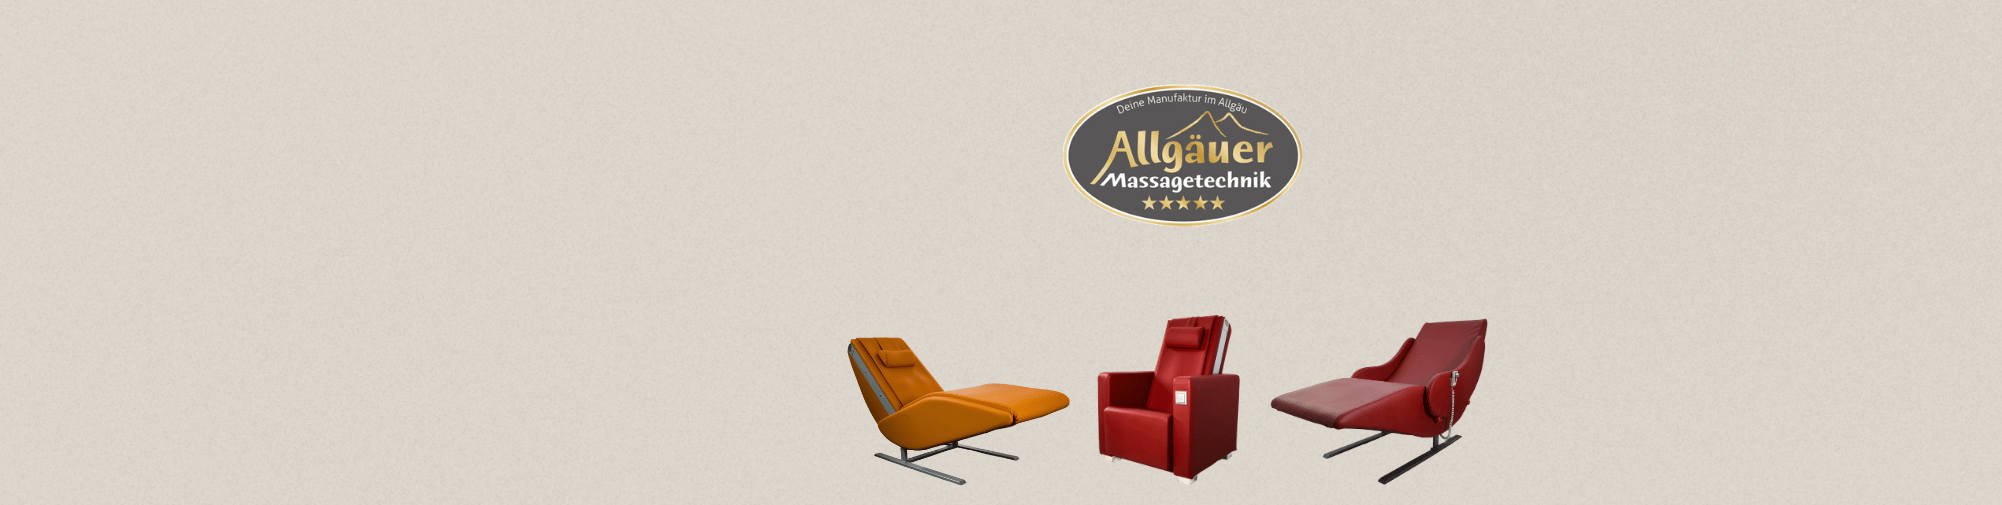 Allgäuer Massagetechnik - Massage chair world